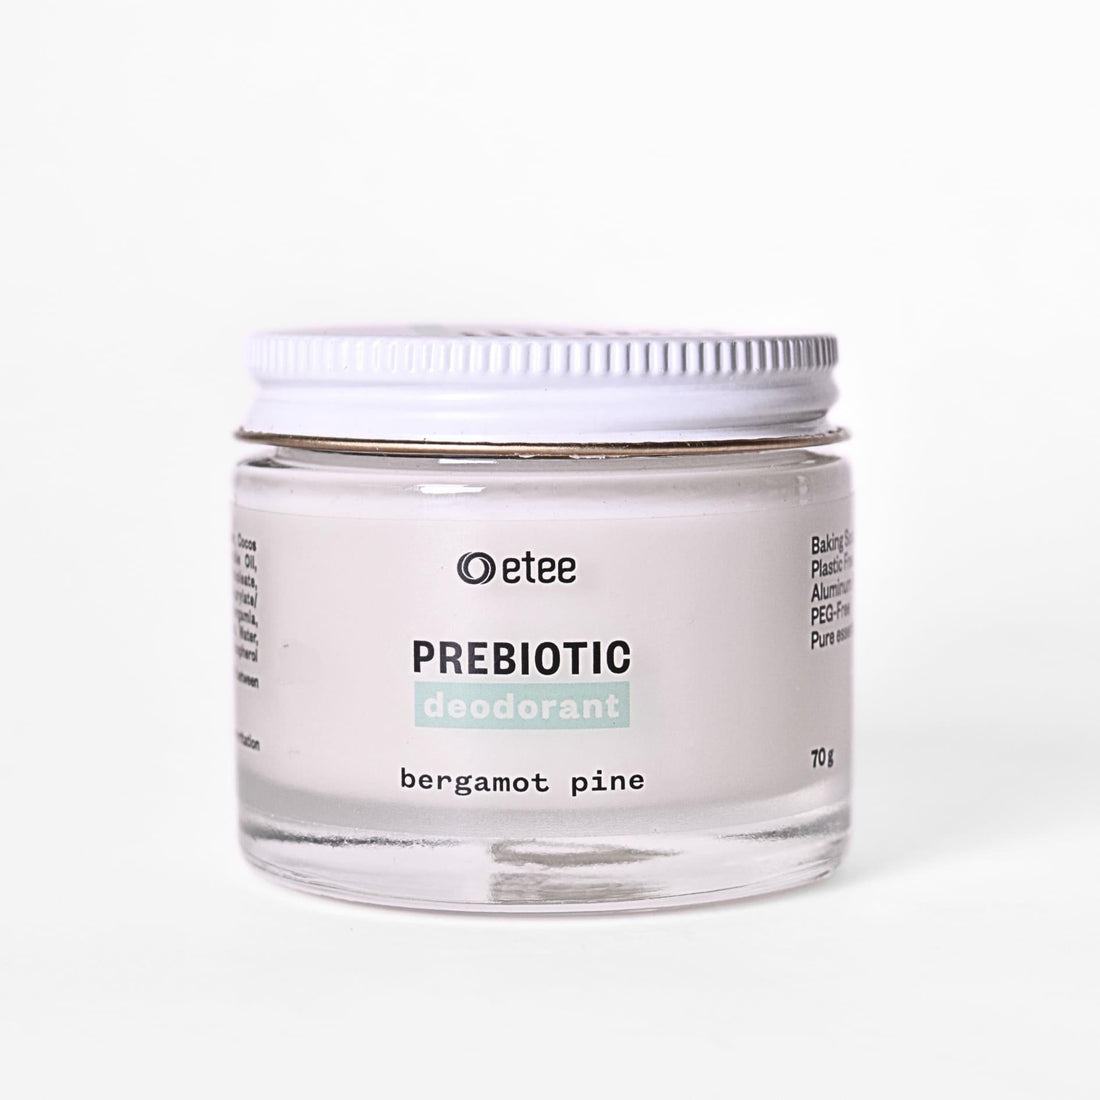 etee prebiotic deodorant in 'bergamot pine' scent on white background